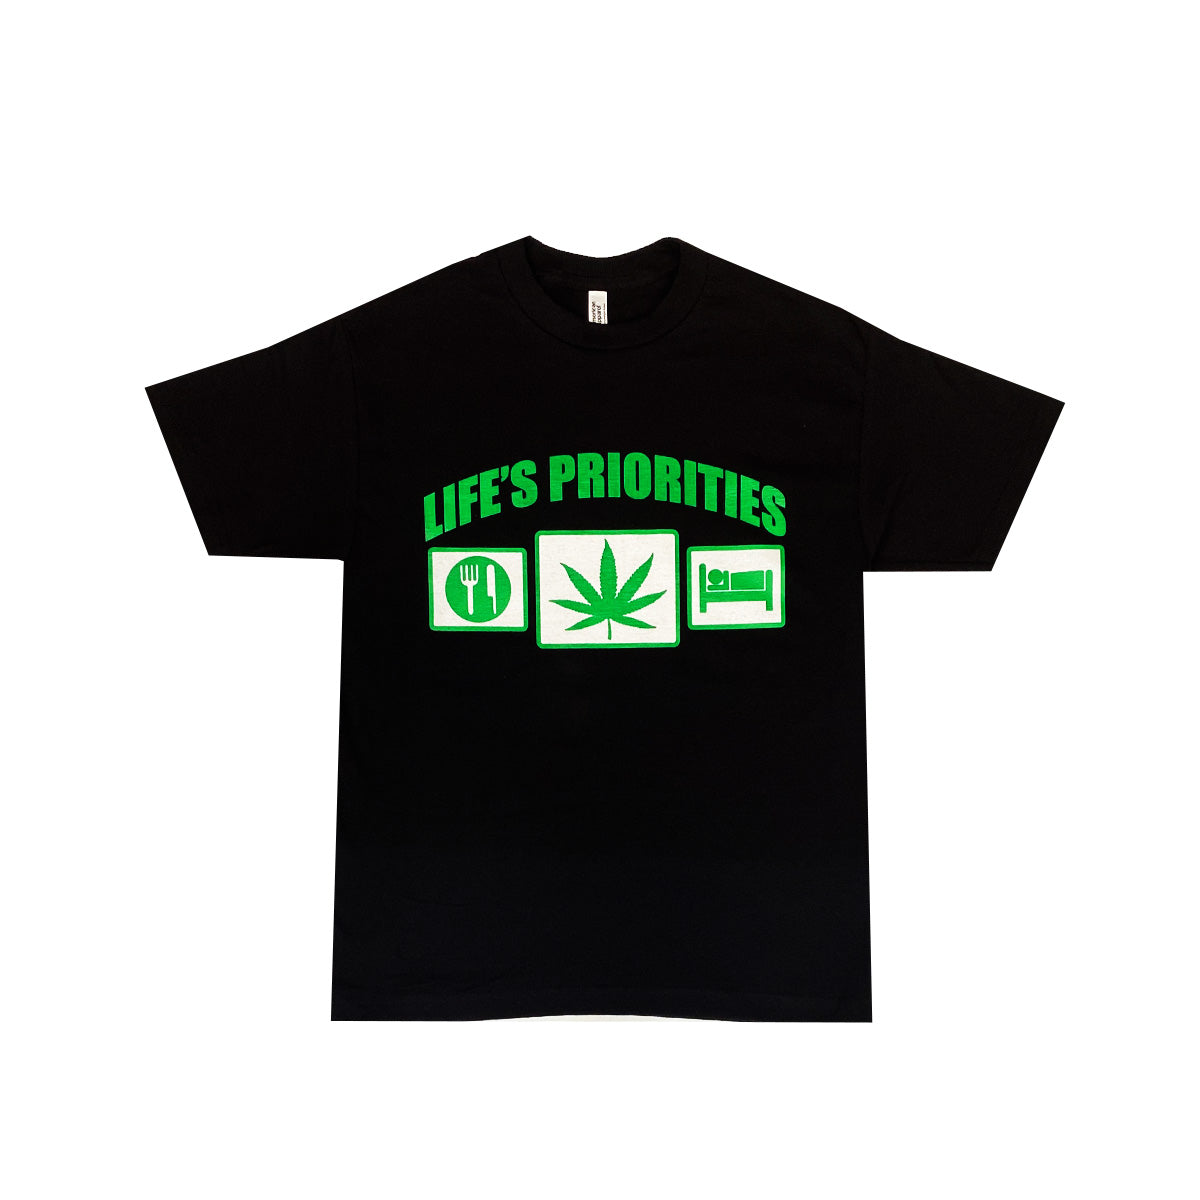 Life's Priorities 100% Cotton T-Shirt, Pack of 5 Units, M, L, XL, XXL, XXXL